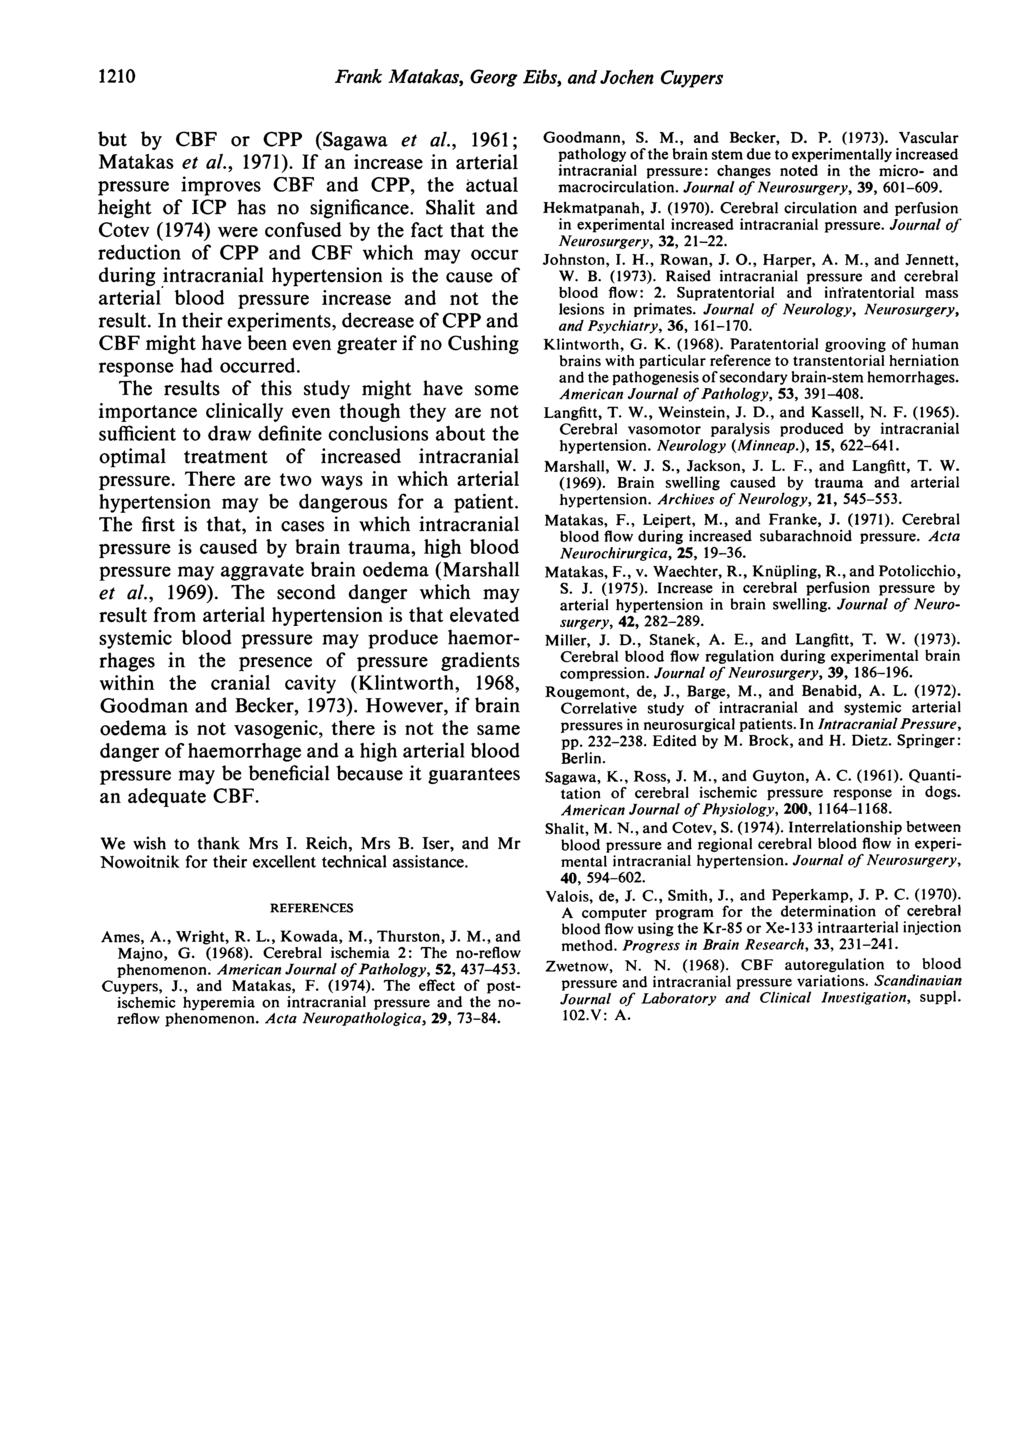 1210 Frank Matakas, Georg Eibs, and Jochen Cuypers but by CBF or CPP (Sagawa et al., 1961; Matakas et al., 1971).